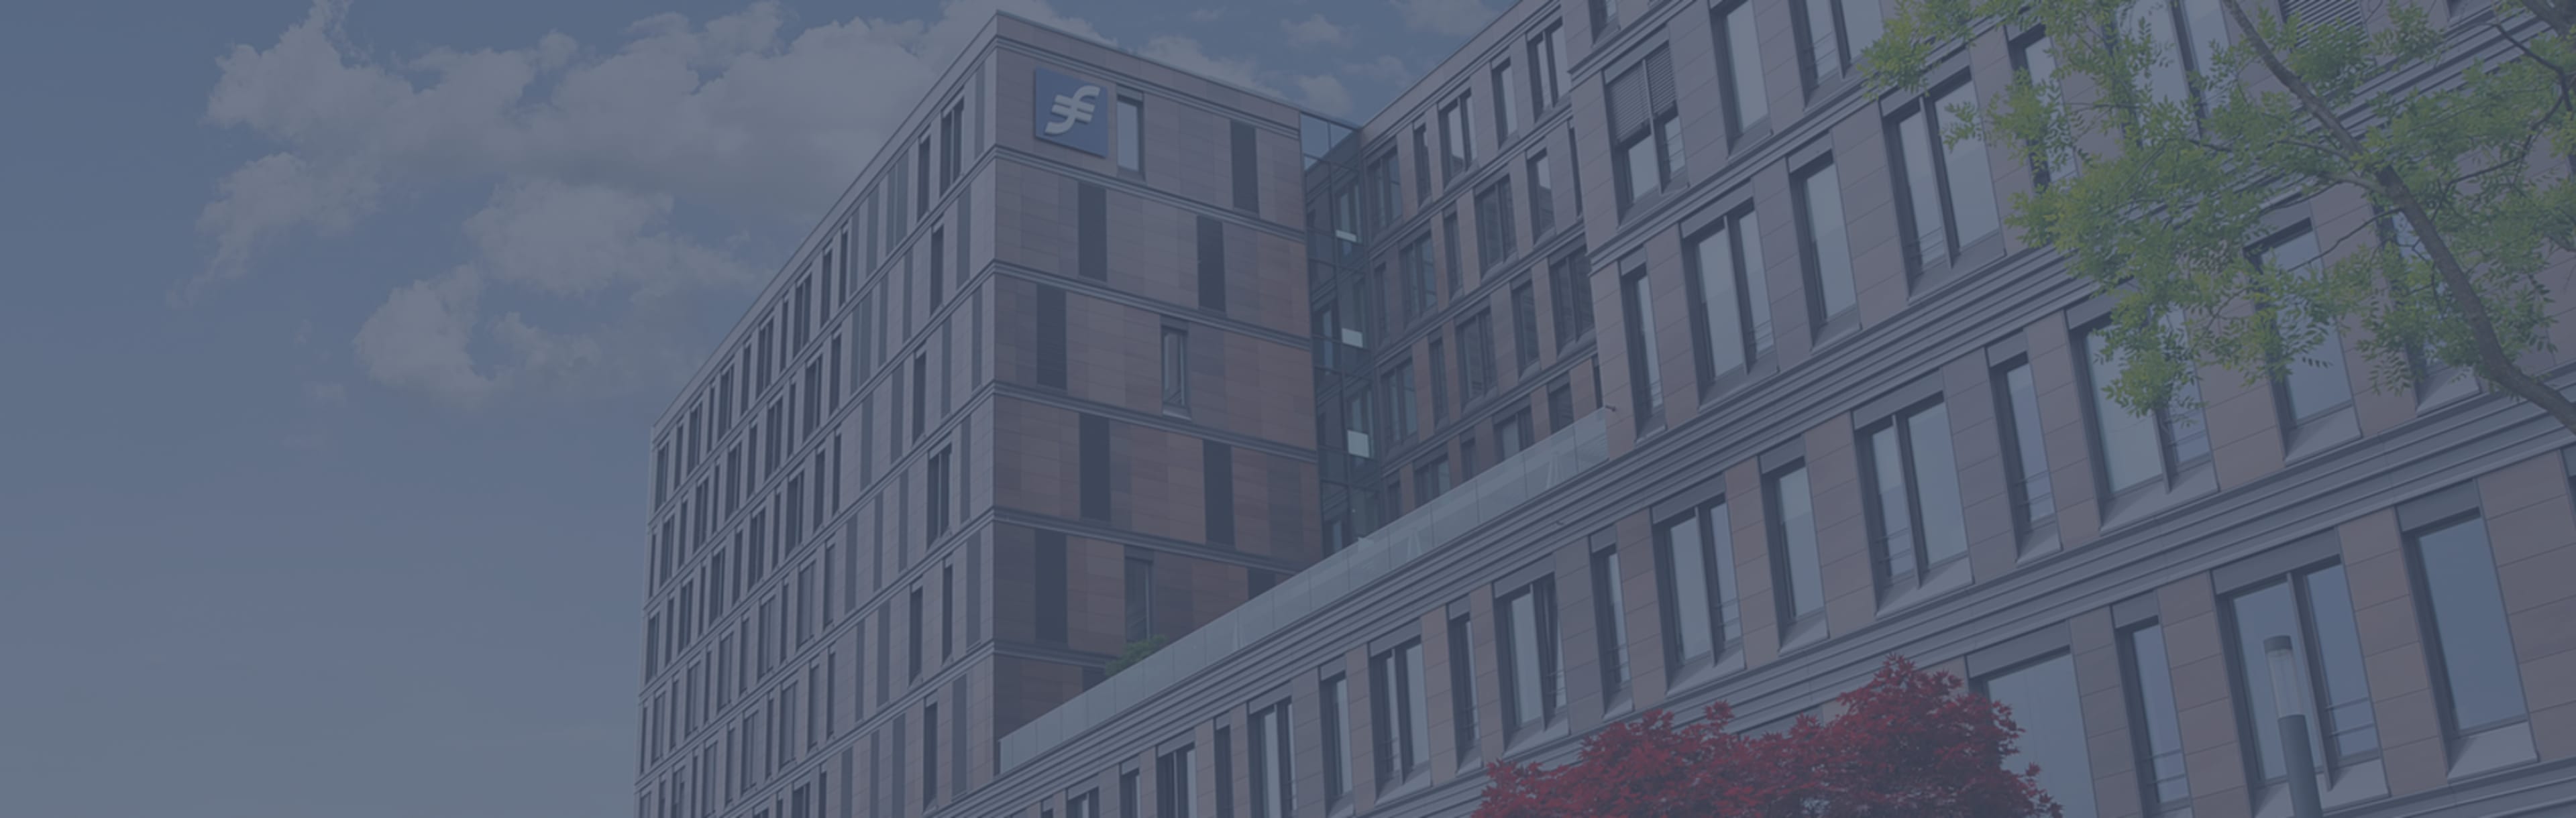 Frankfurt School of Finance & Management ปริญญาโทสาขาการควบรวมกิจการ